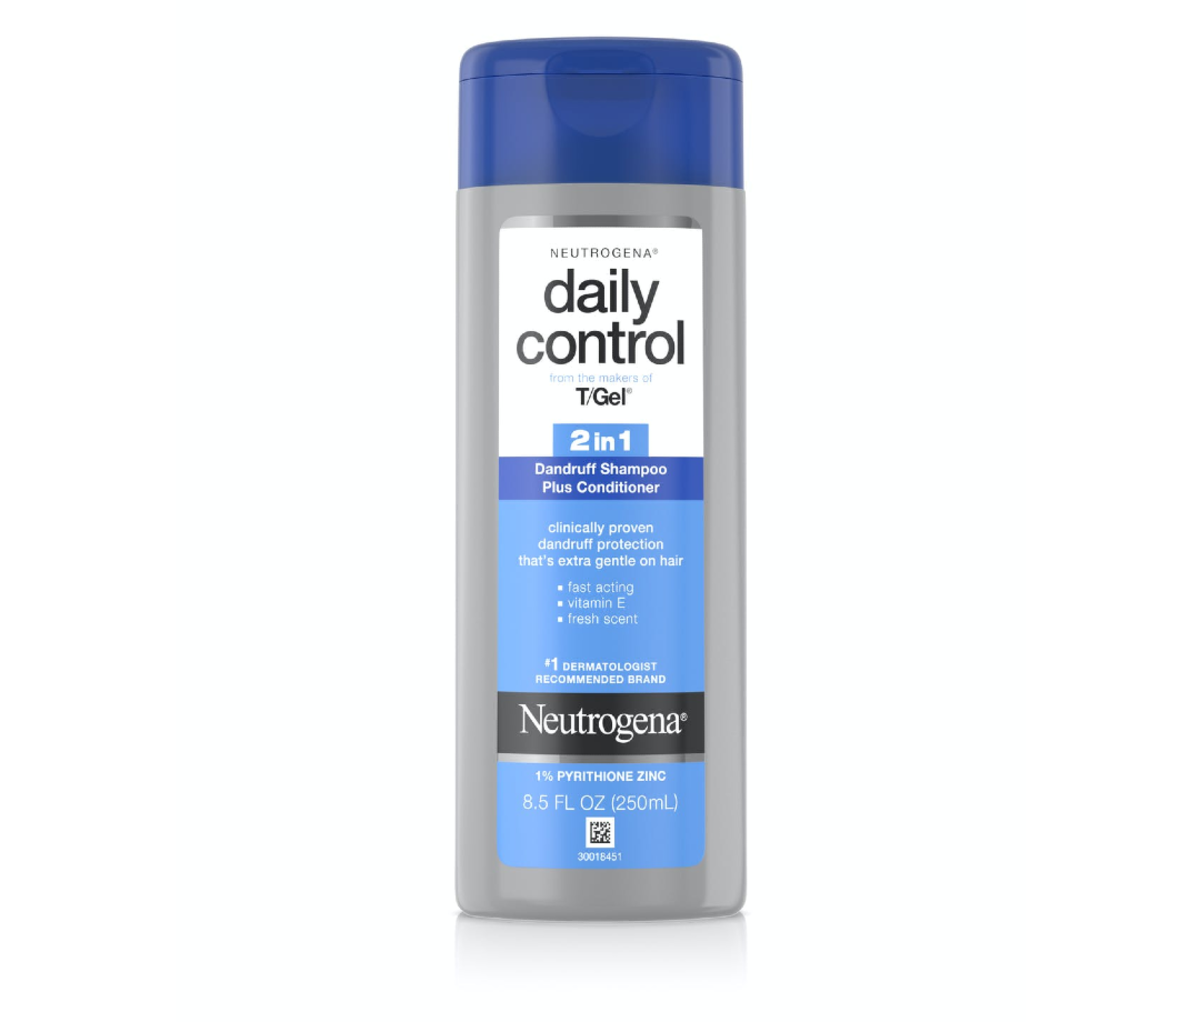 Neutrogena T/Gel Daily Control 2-in-1 Anti-Dandruff Shampoo Plus Conditioner